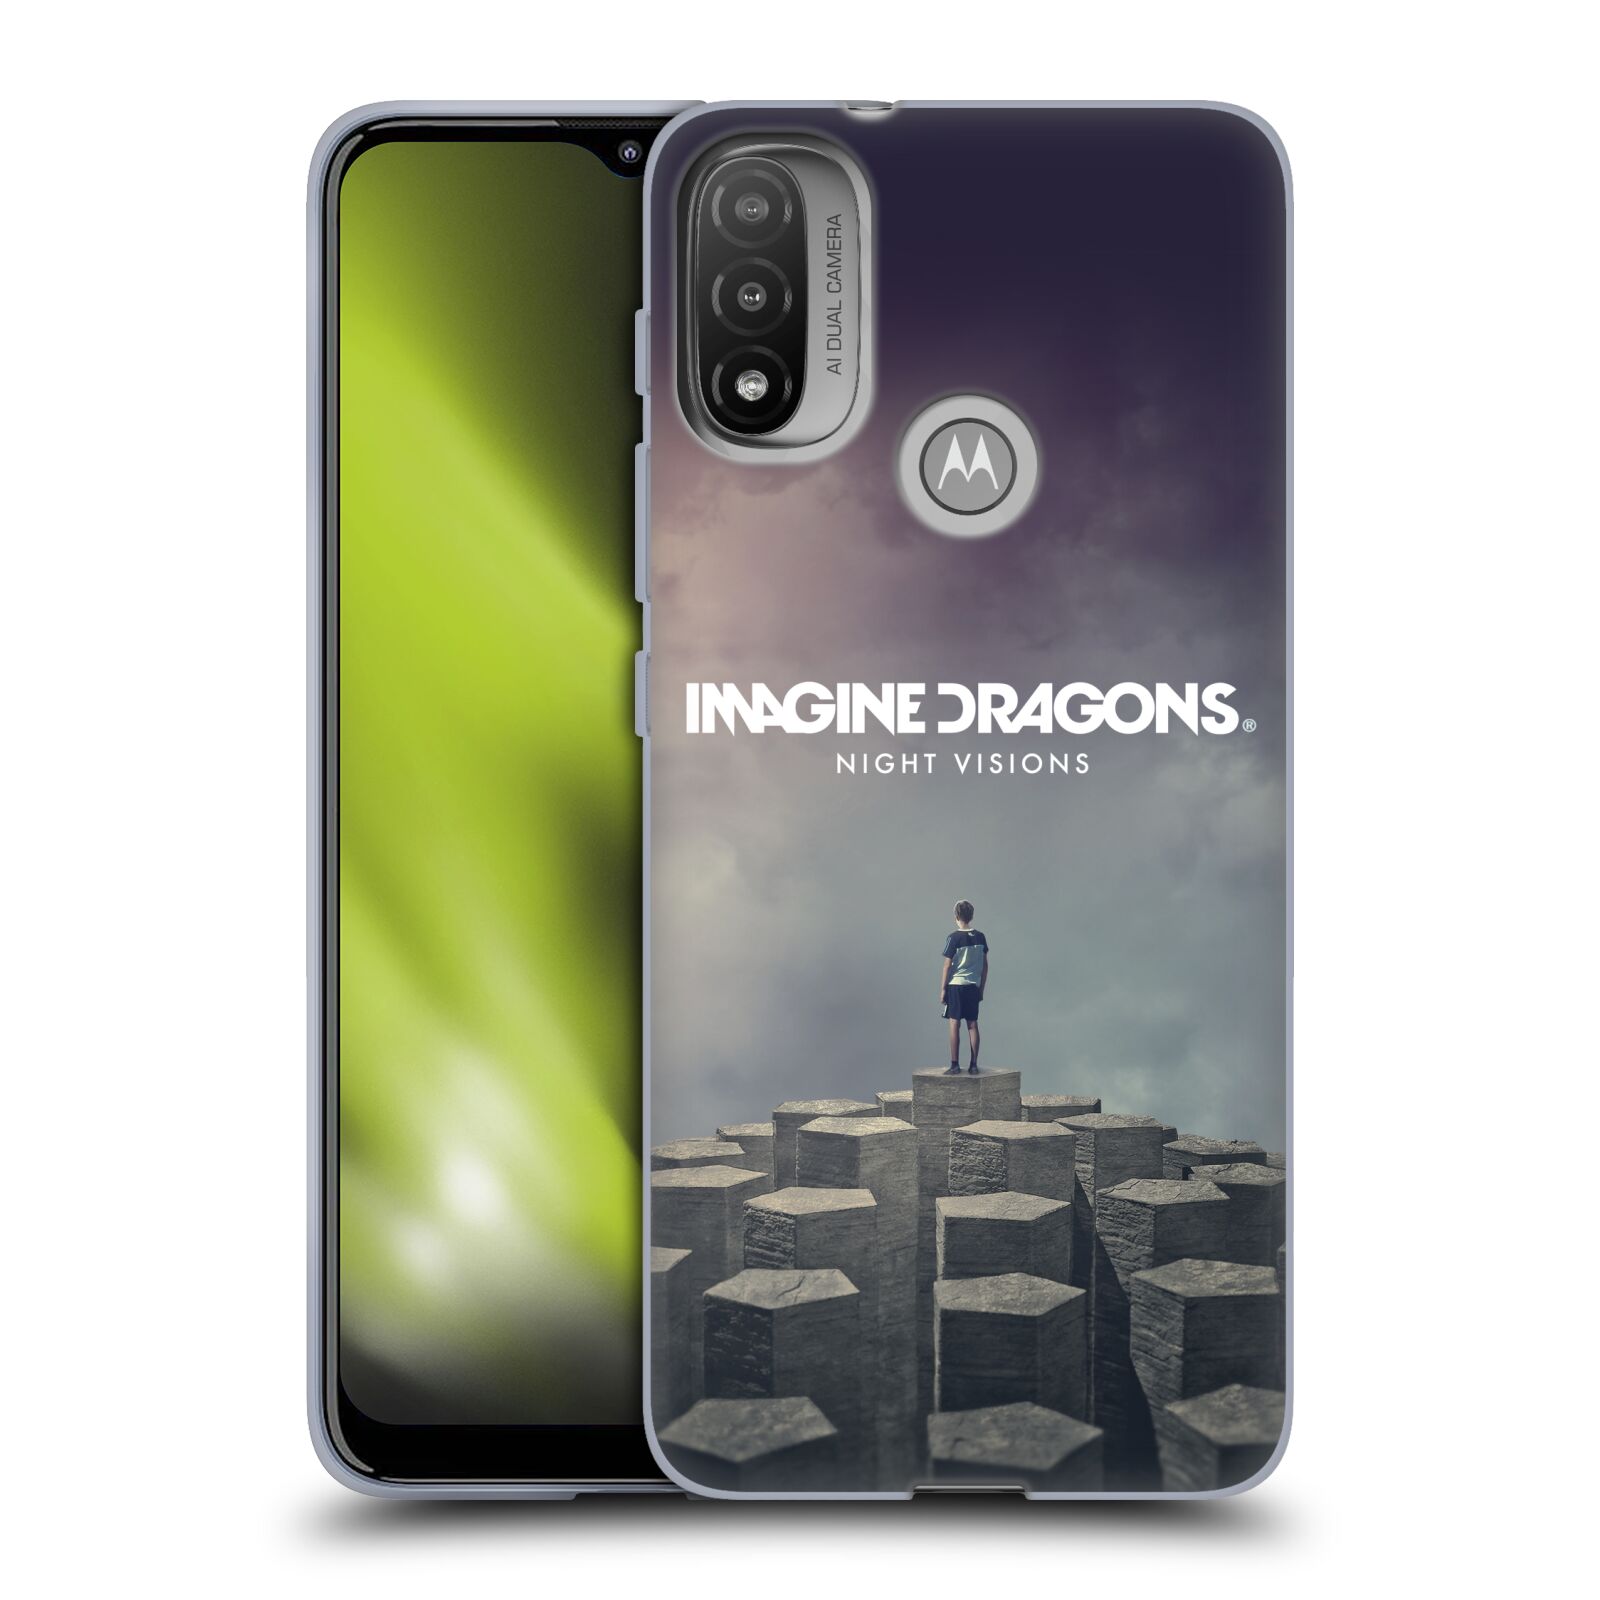 Silikonové pouzdro na mobil Motorola Moto E20 - Imagine Dragons - Night Visions